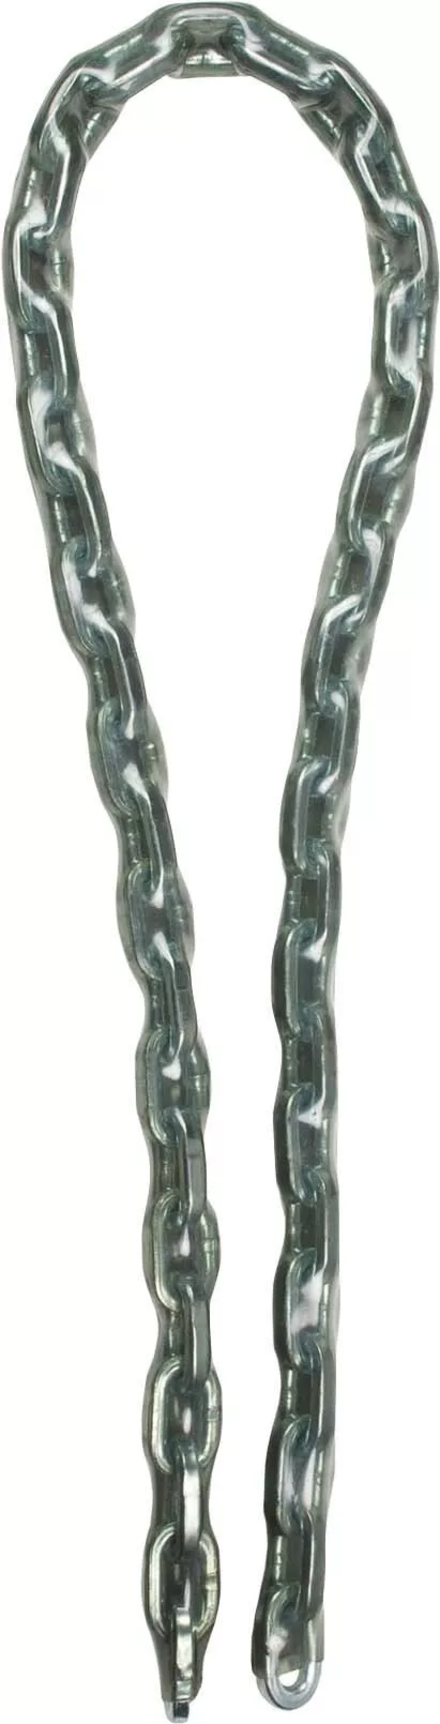 Chaine acier cemente 1mx8mm MASTERLOCK - 15648